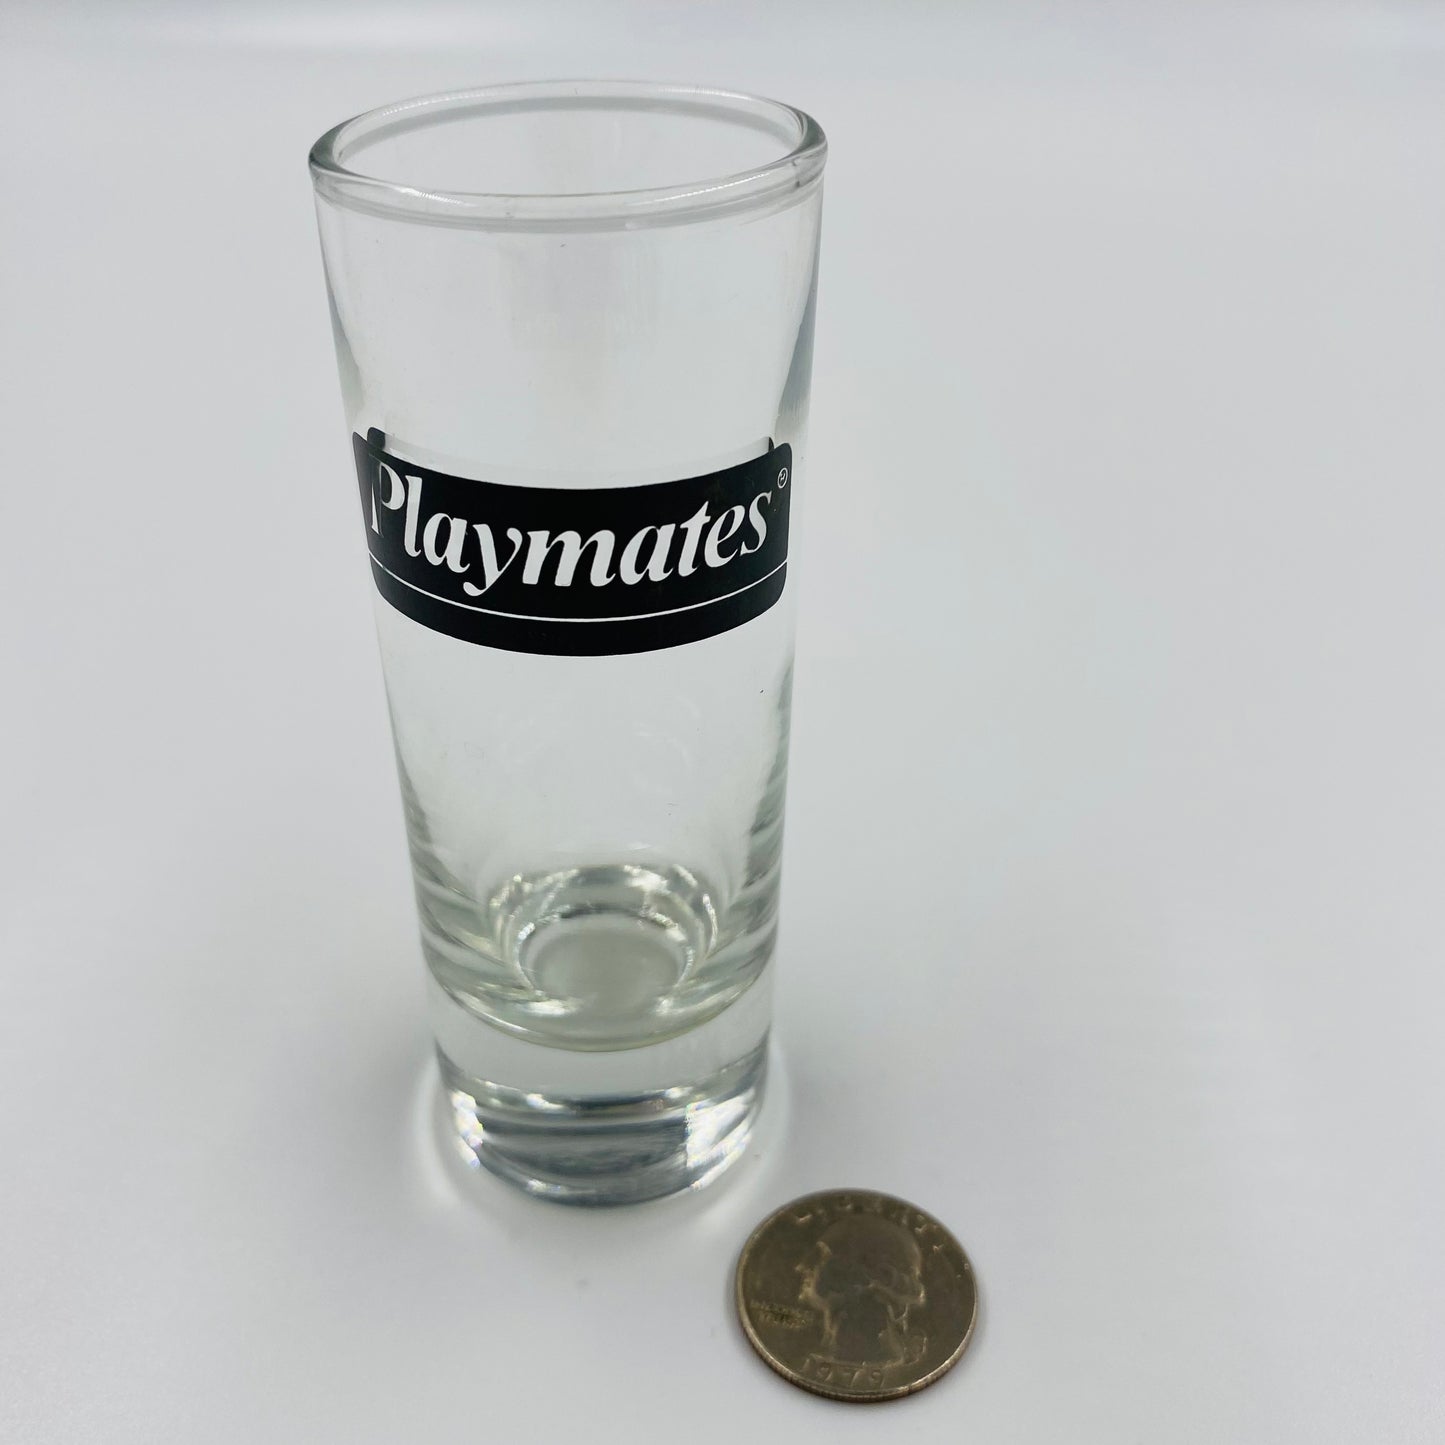 Playmates shot glass